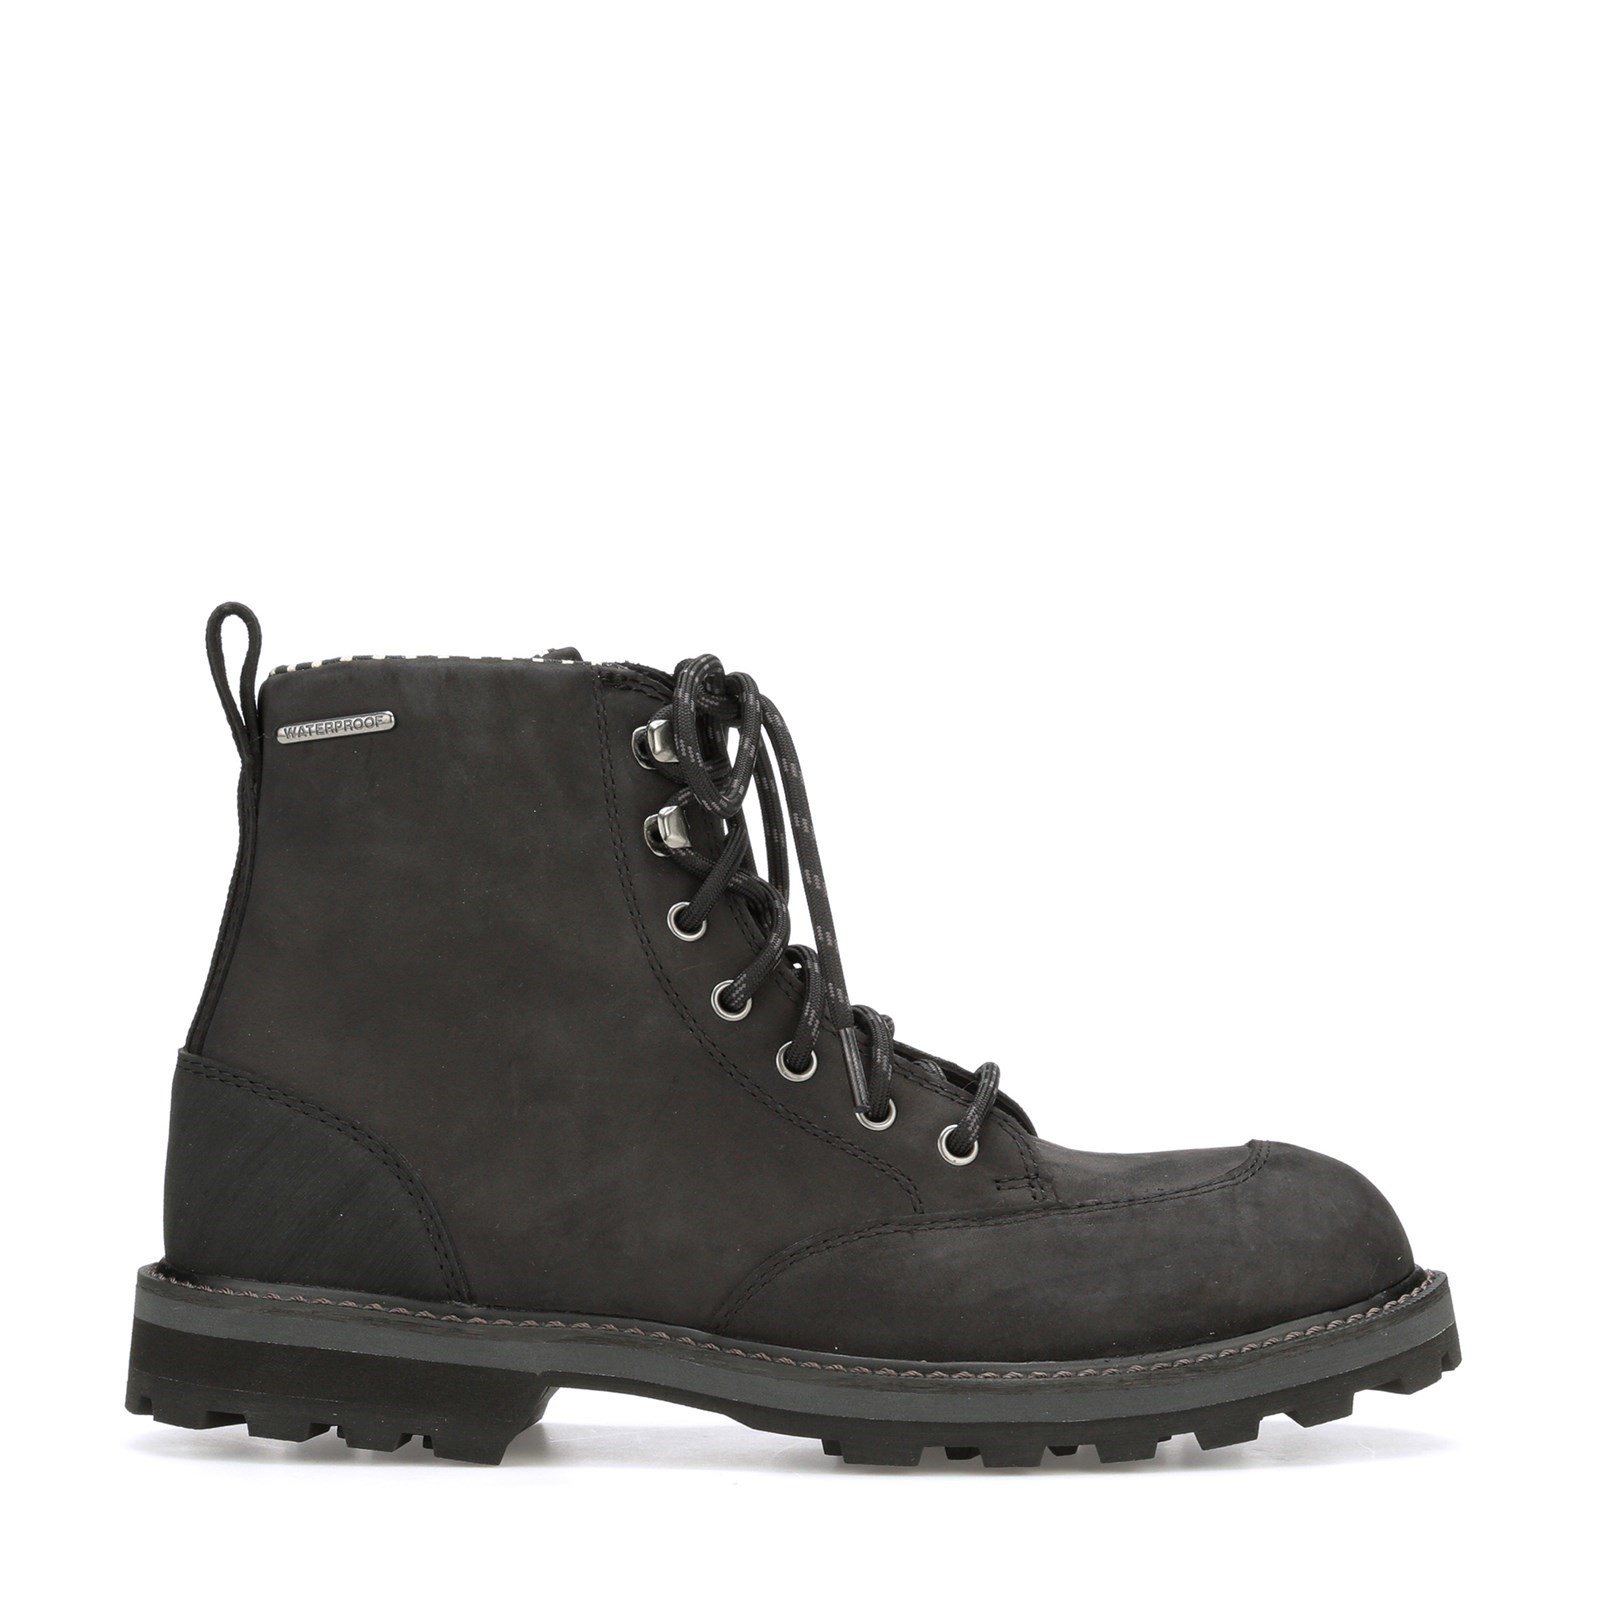 Muck Boots Men's Foreman Boot Black 31854 - Black 12